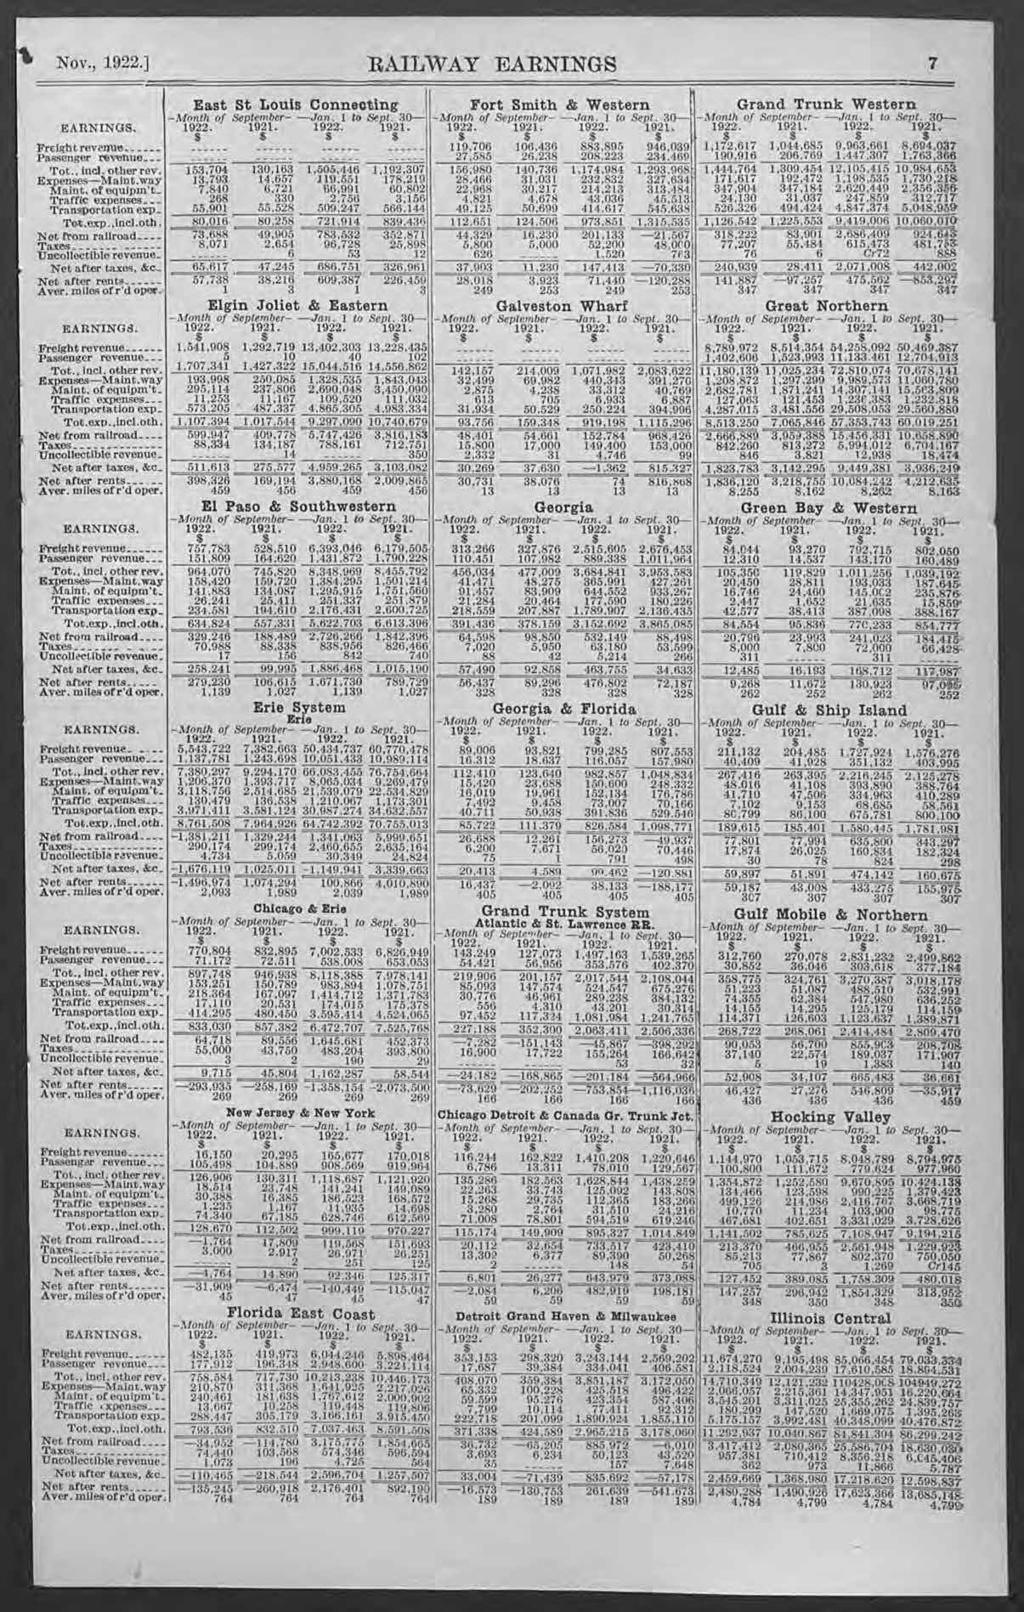 Nov., 1922.] RAILWAY EARNINGS 7 Net from railroad_ - EARNING S. Tot., Incl. other rev Traffic expenses..- _ Transportation exp - Tot.exp.,incl.oth Net from railroad.... _ Passenger revenue.